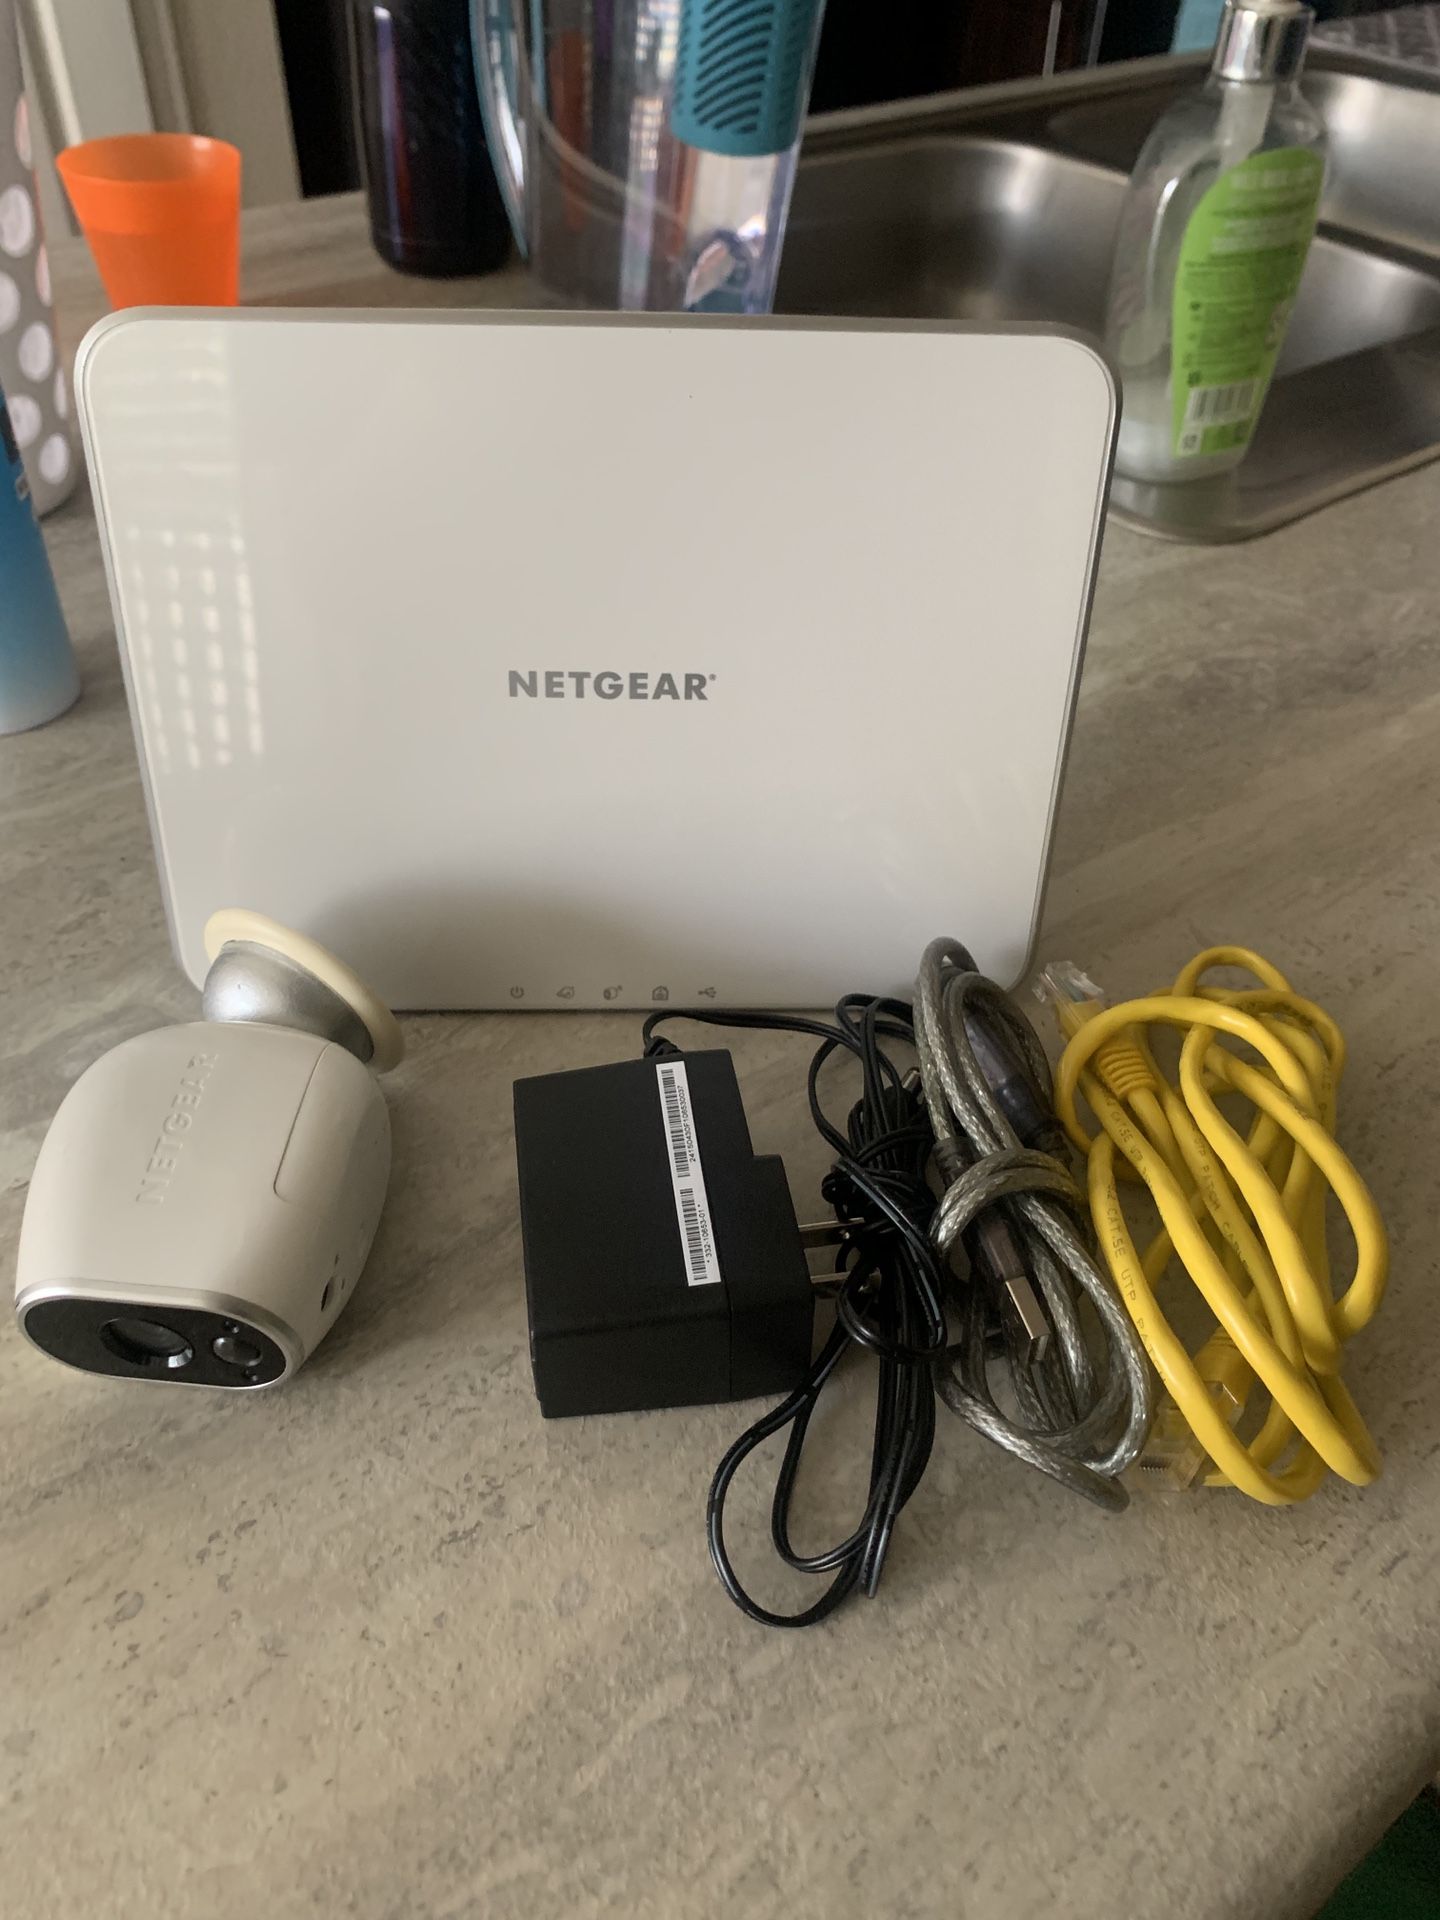 Netgear security camera